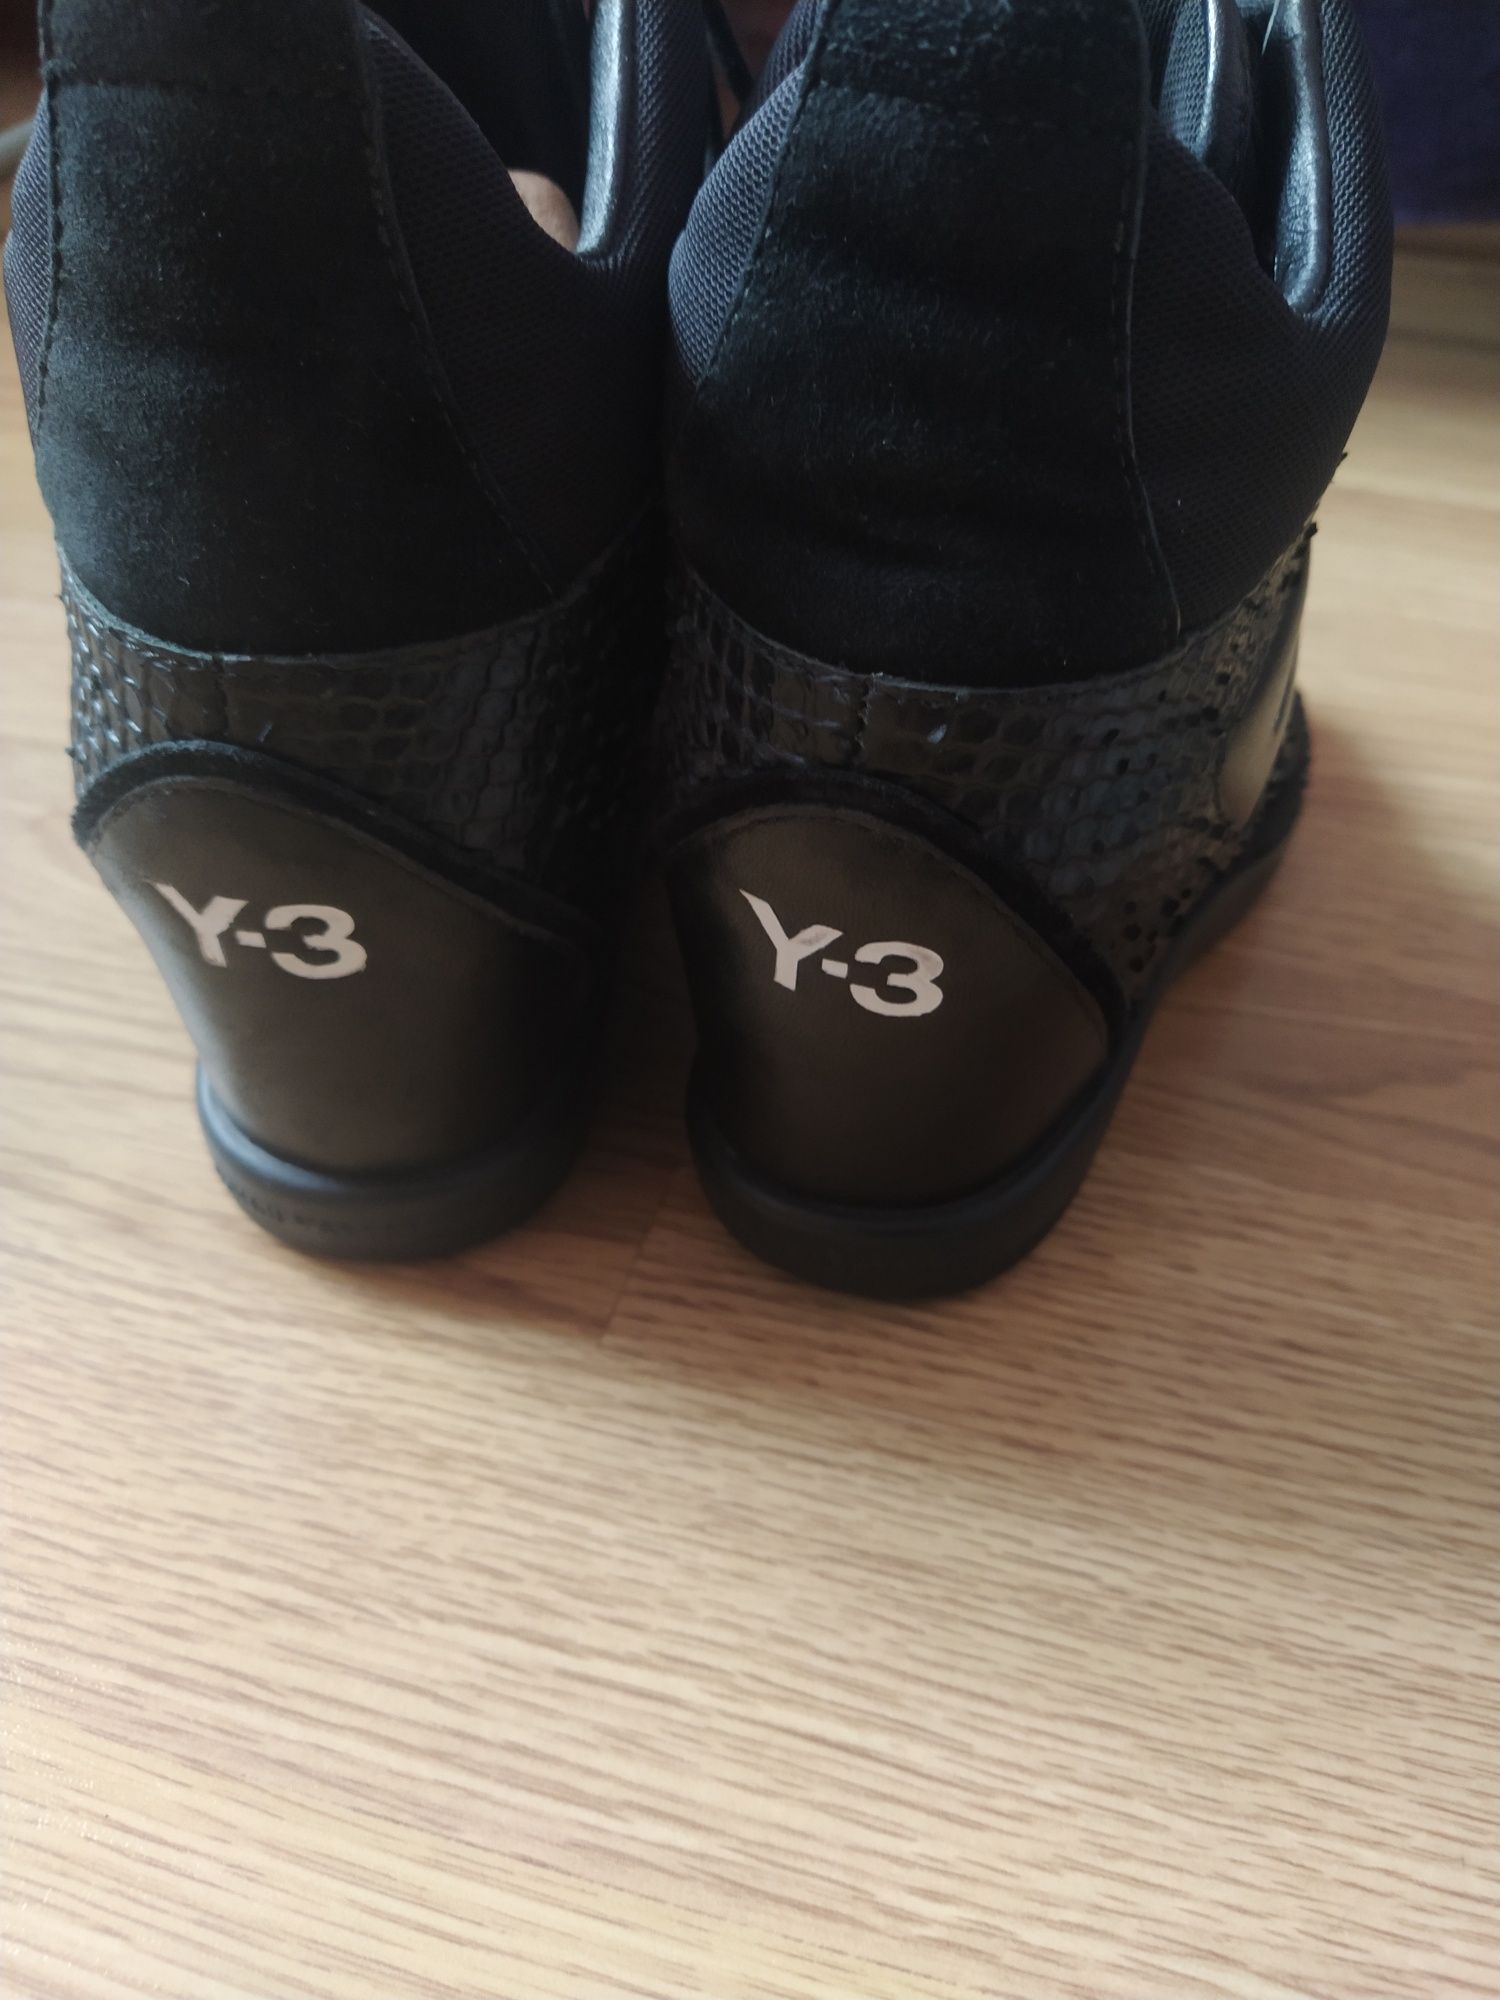 Кроссовки Adidas Y-3 Yohji Yamamoto 38 размер 24,5см